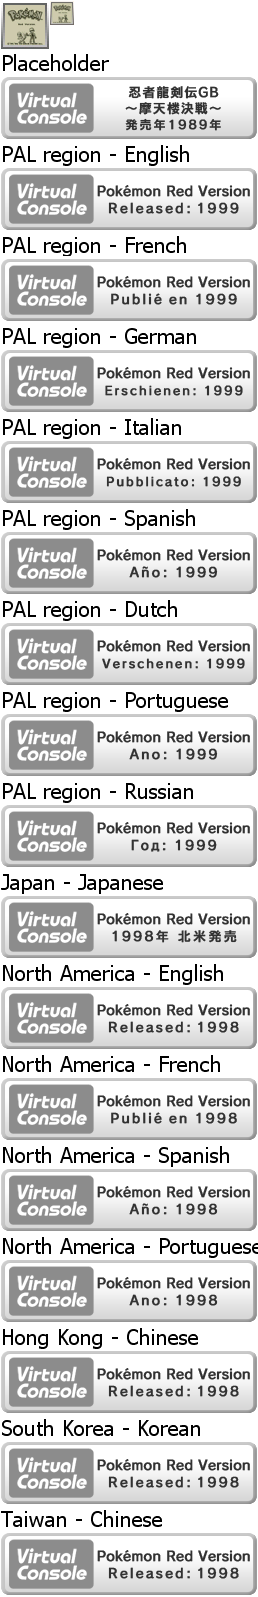 Virtual Console - Pokémon Red Version